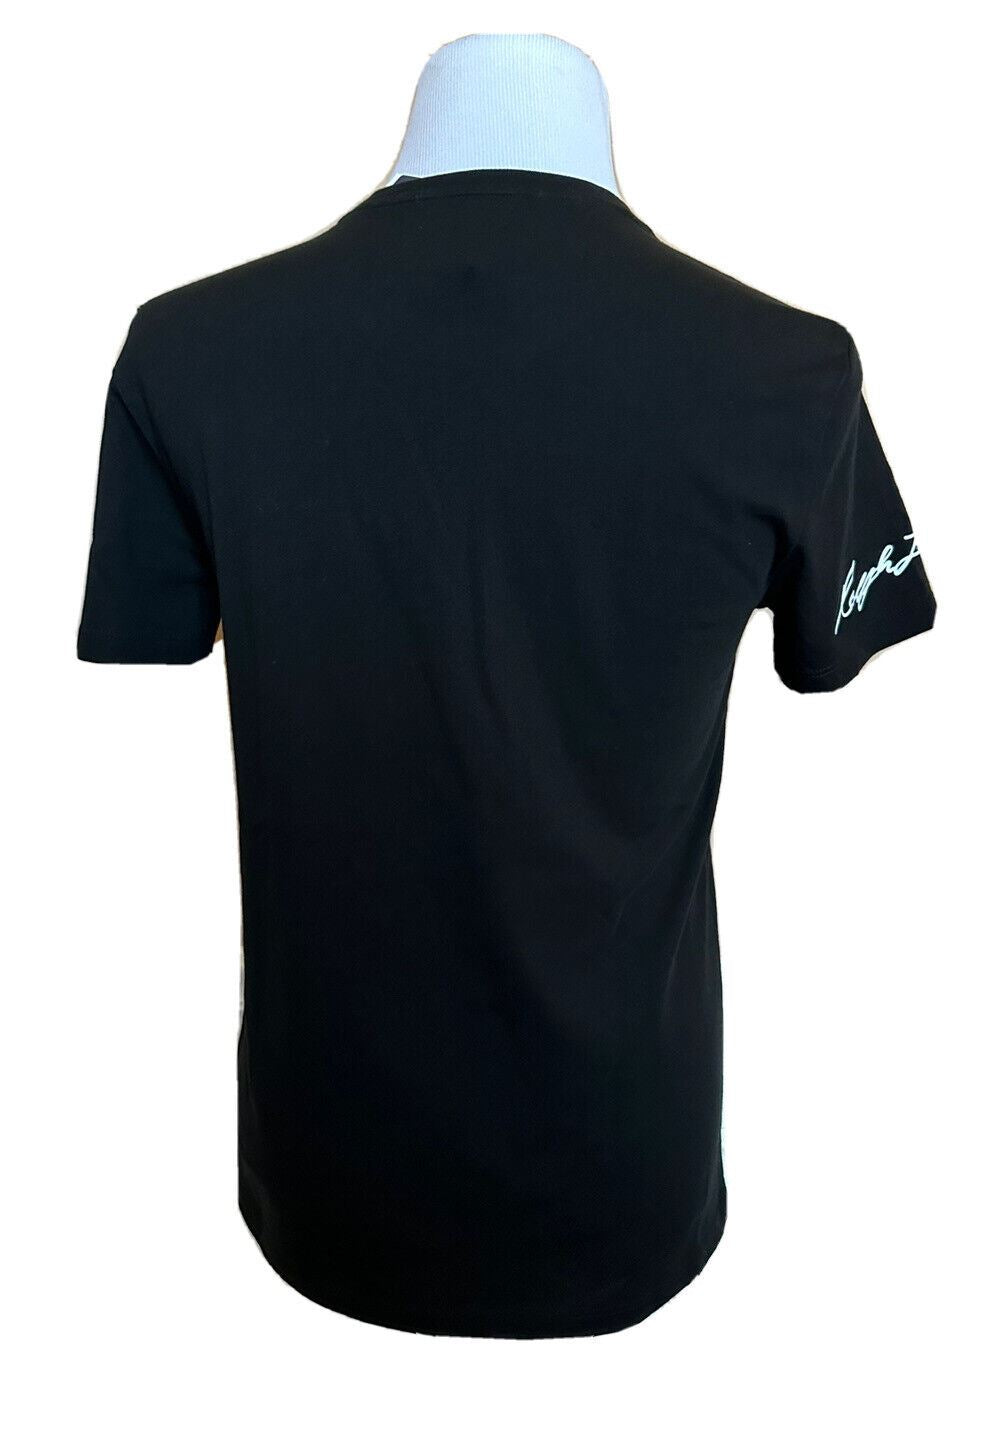 NWT $65 Polo Ralph Lauren Short Sleeve Logo T-shirt Black XL